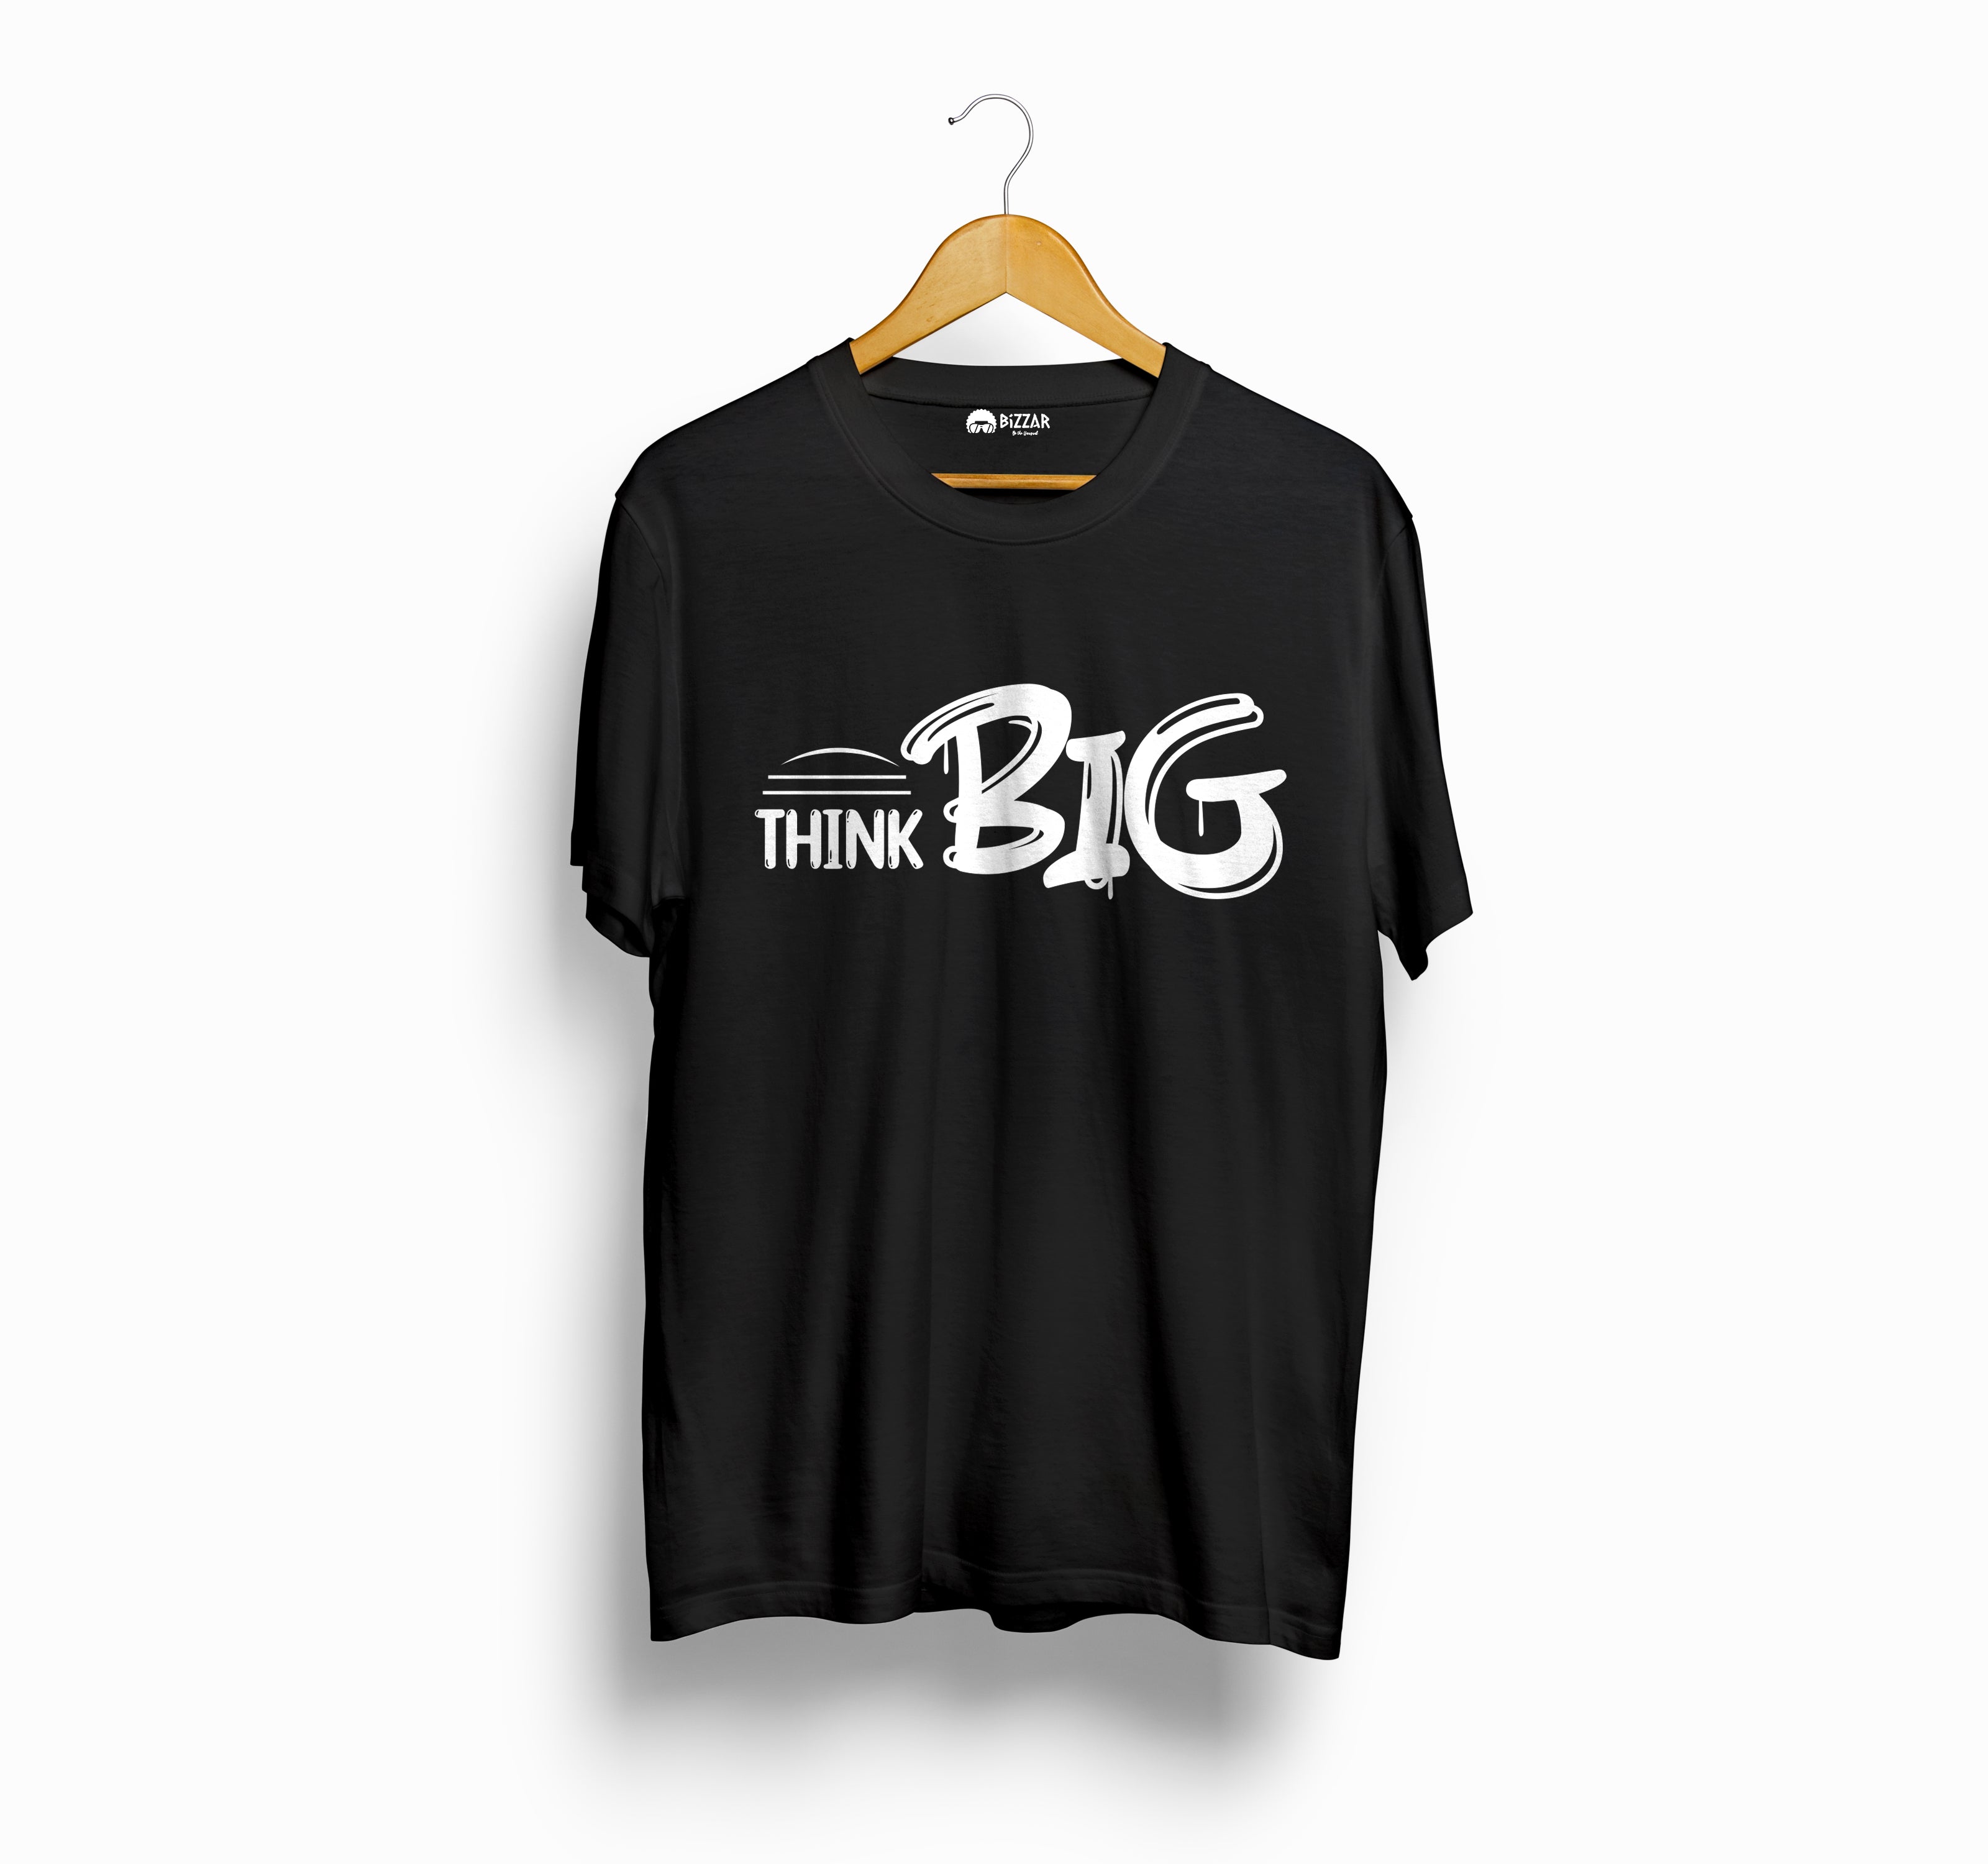 Bizzar's Think Big Black T-Shirt